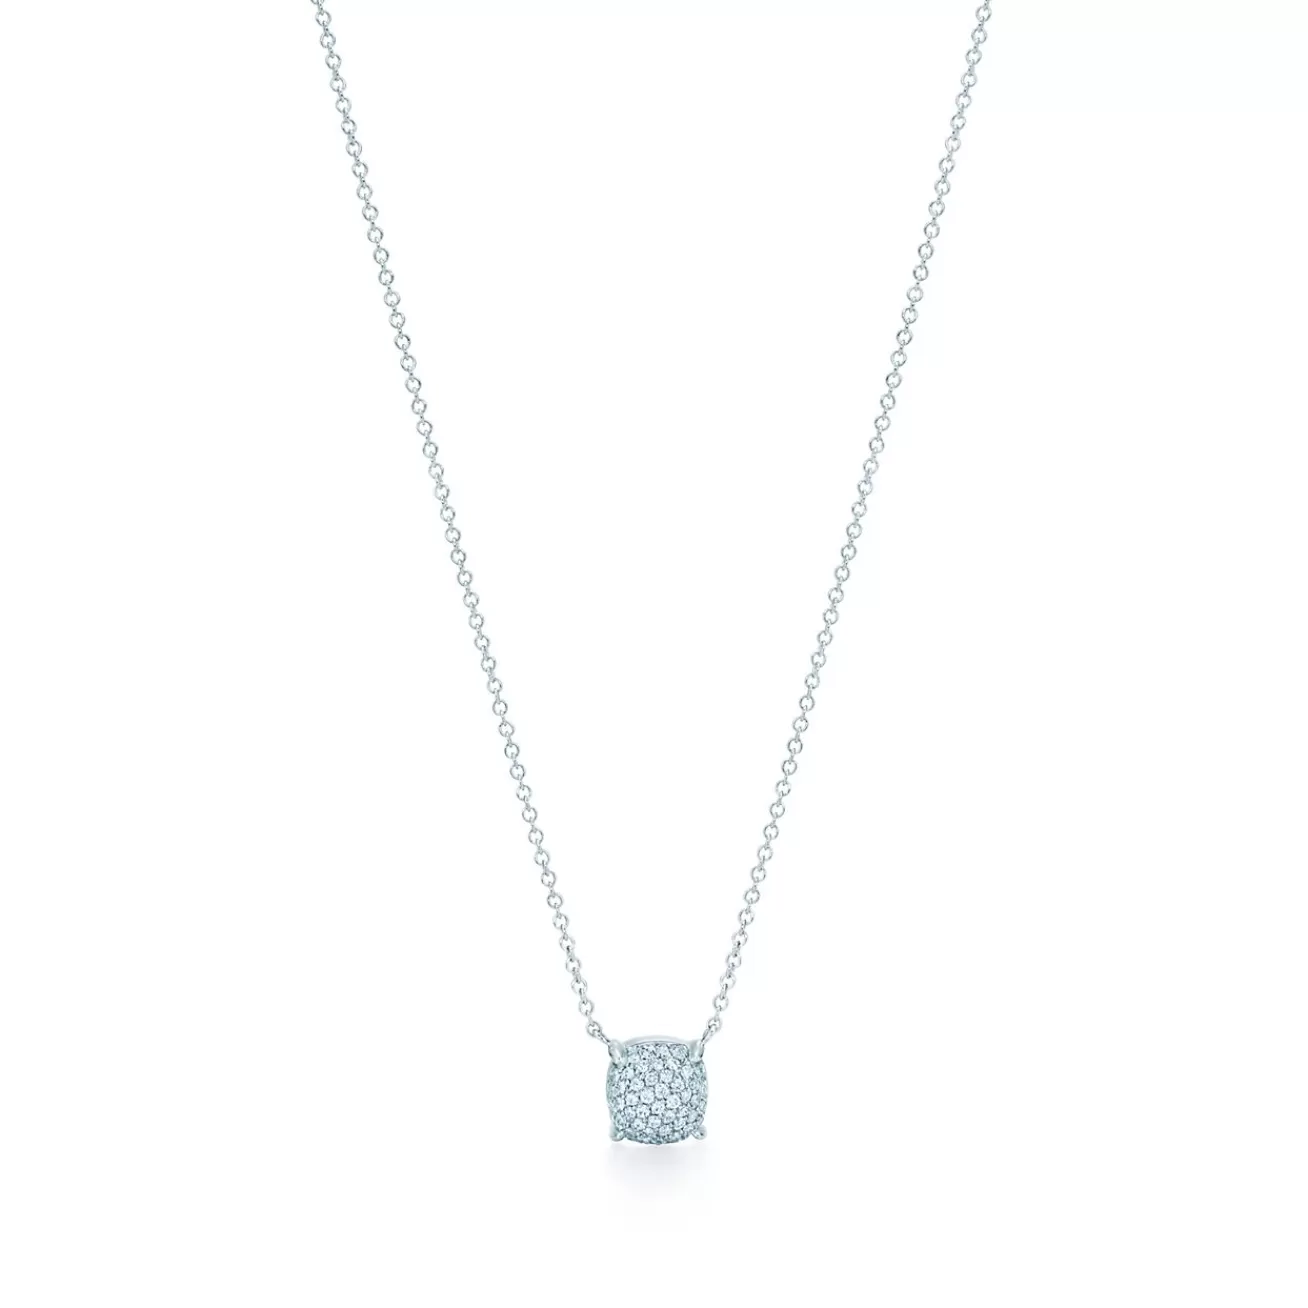 Tiffany & Co. Paloma's Sugar Stacks pendant in 18k white gold with diamonds. | ^ Necklaces & Pendants | Diamond Jewelry